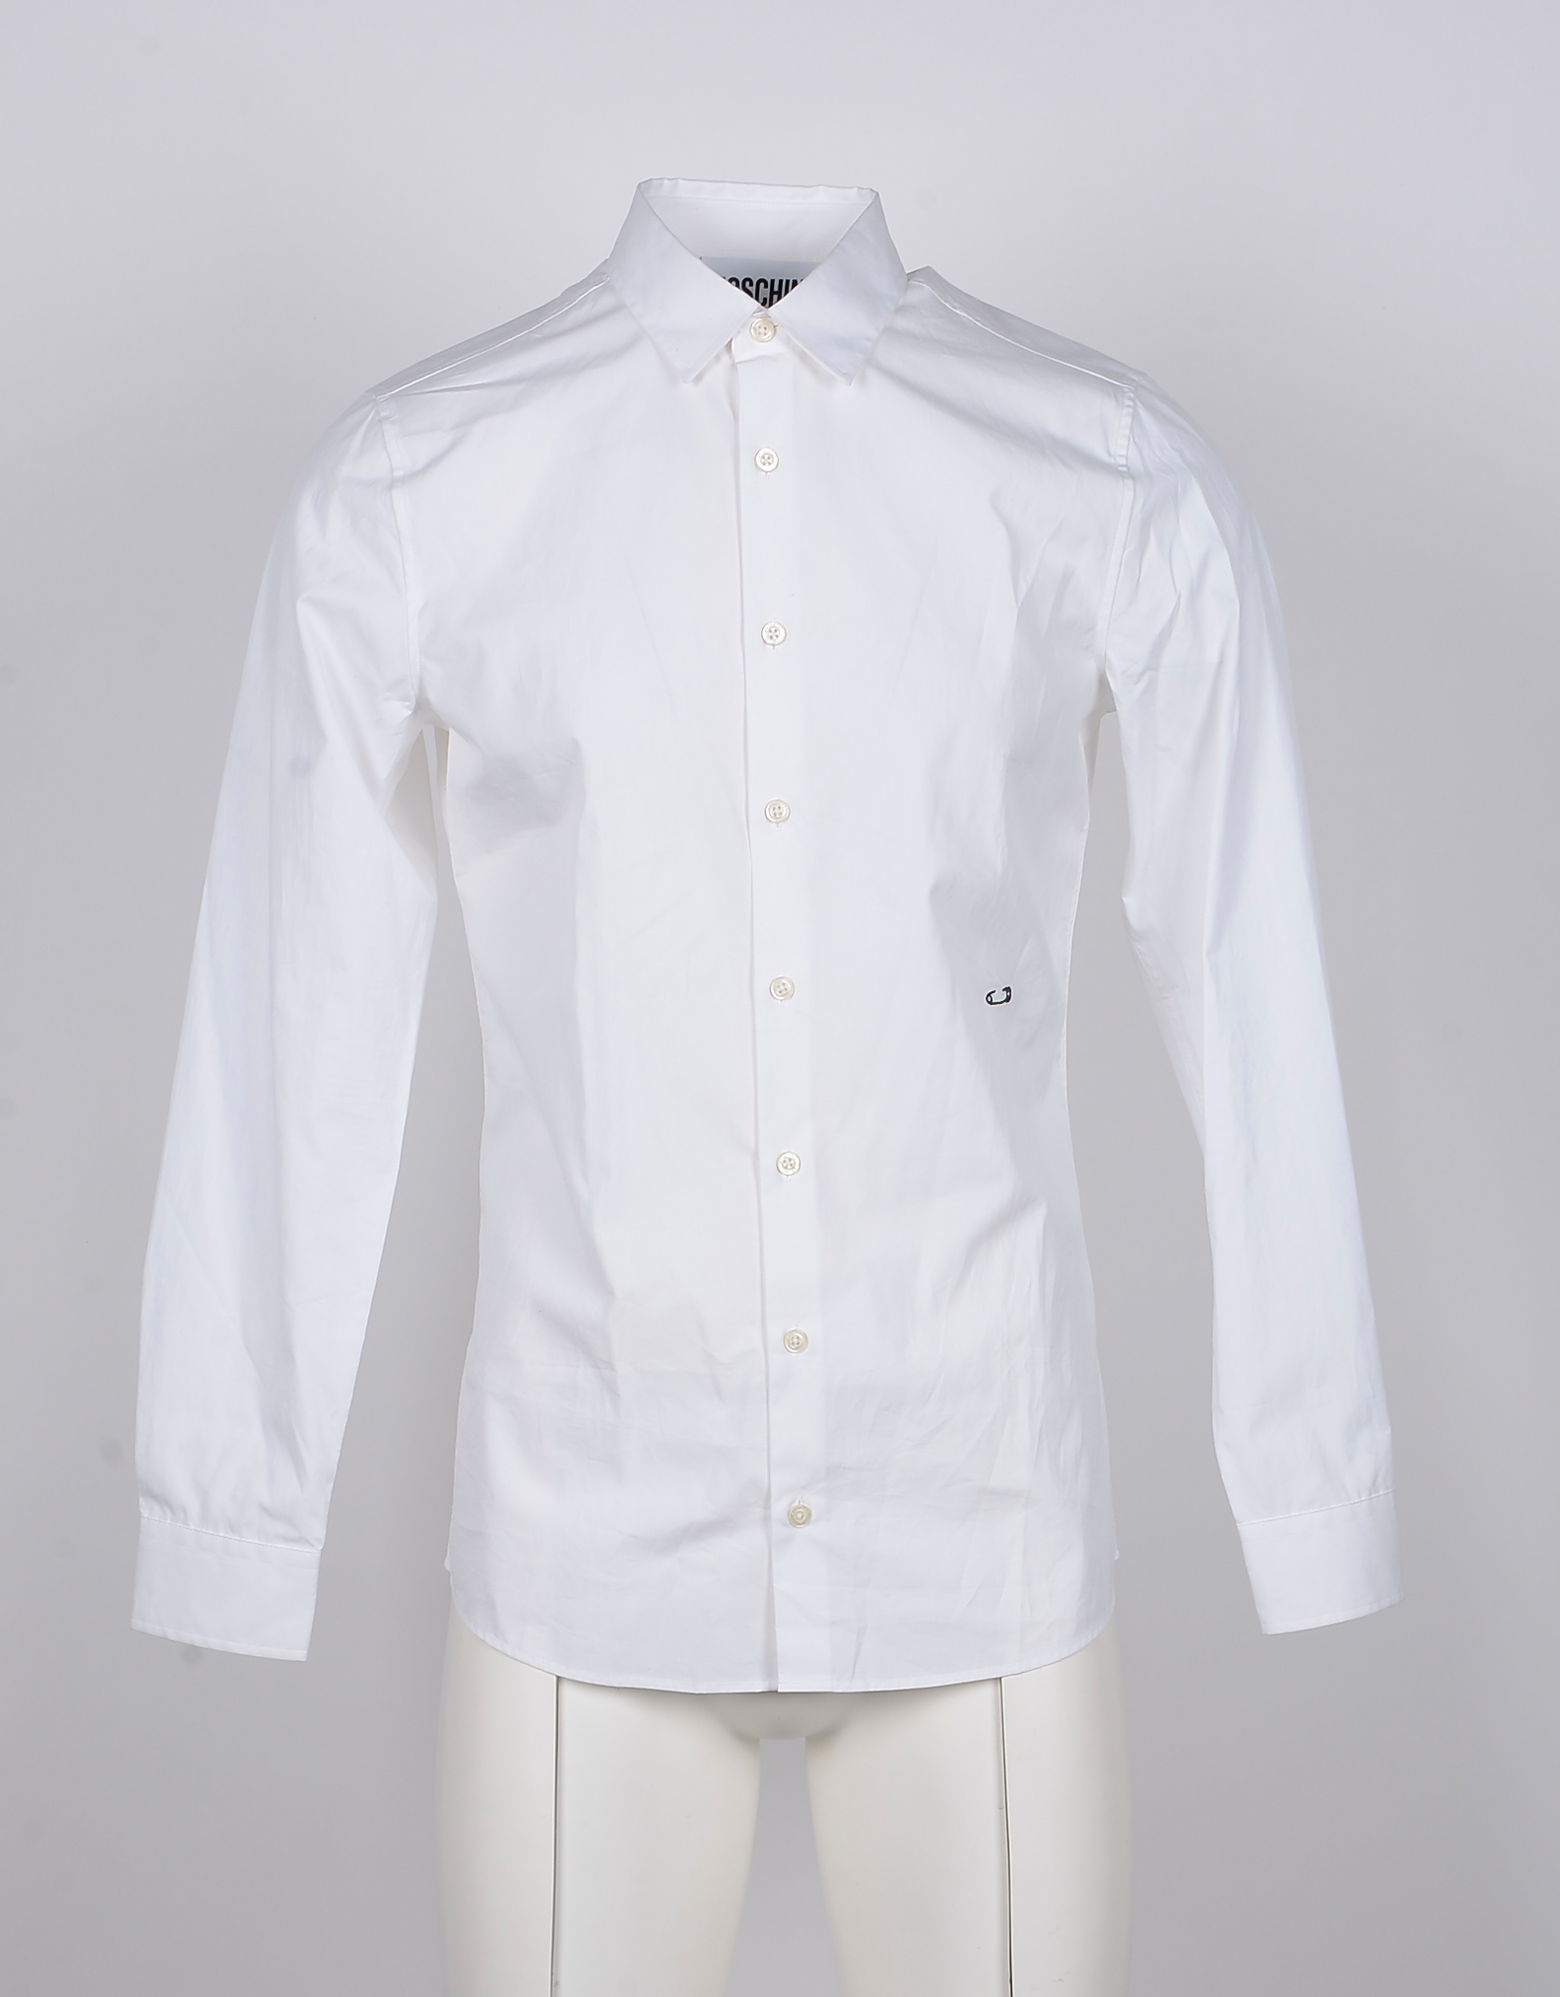 white cotton dress shirt mens